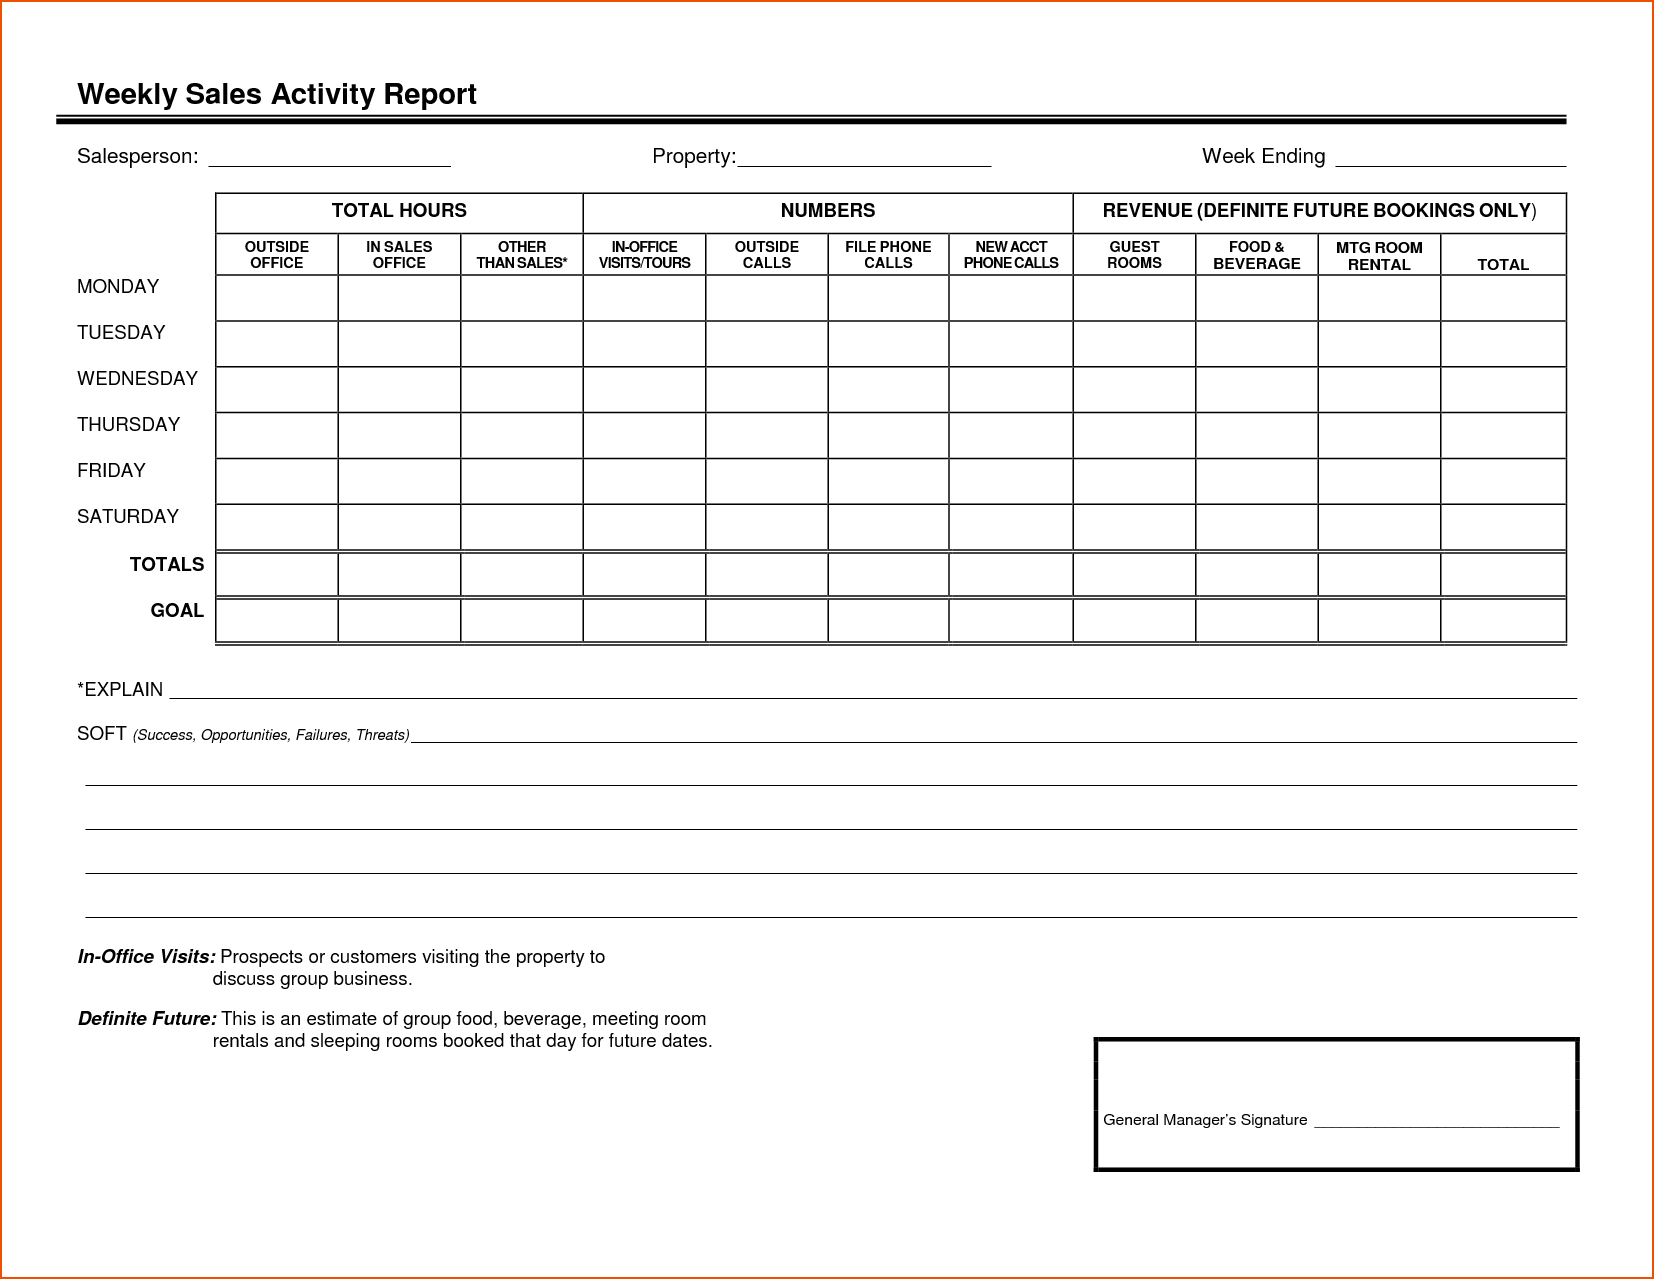 Sales Activity Report Template Excel - Atlantaauctionco For Sales Activity Report Template Excel